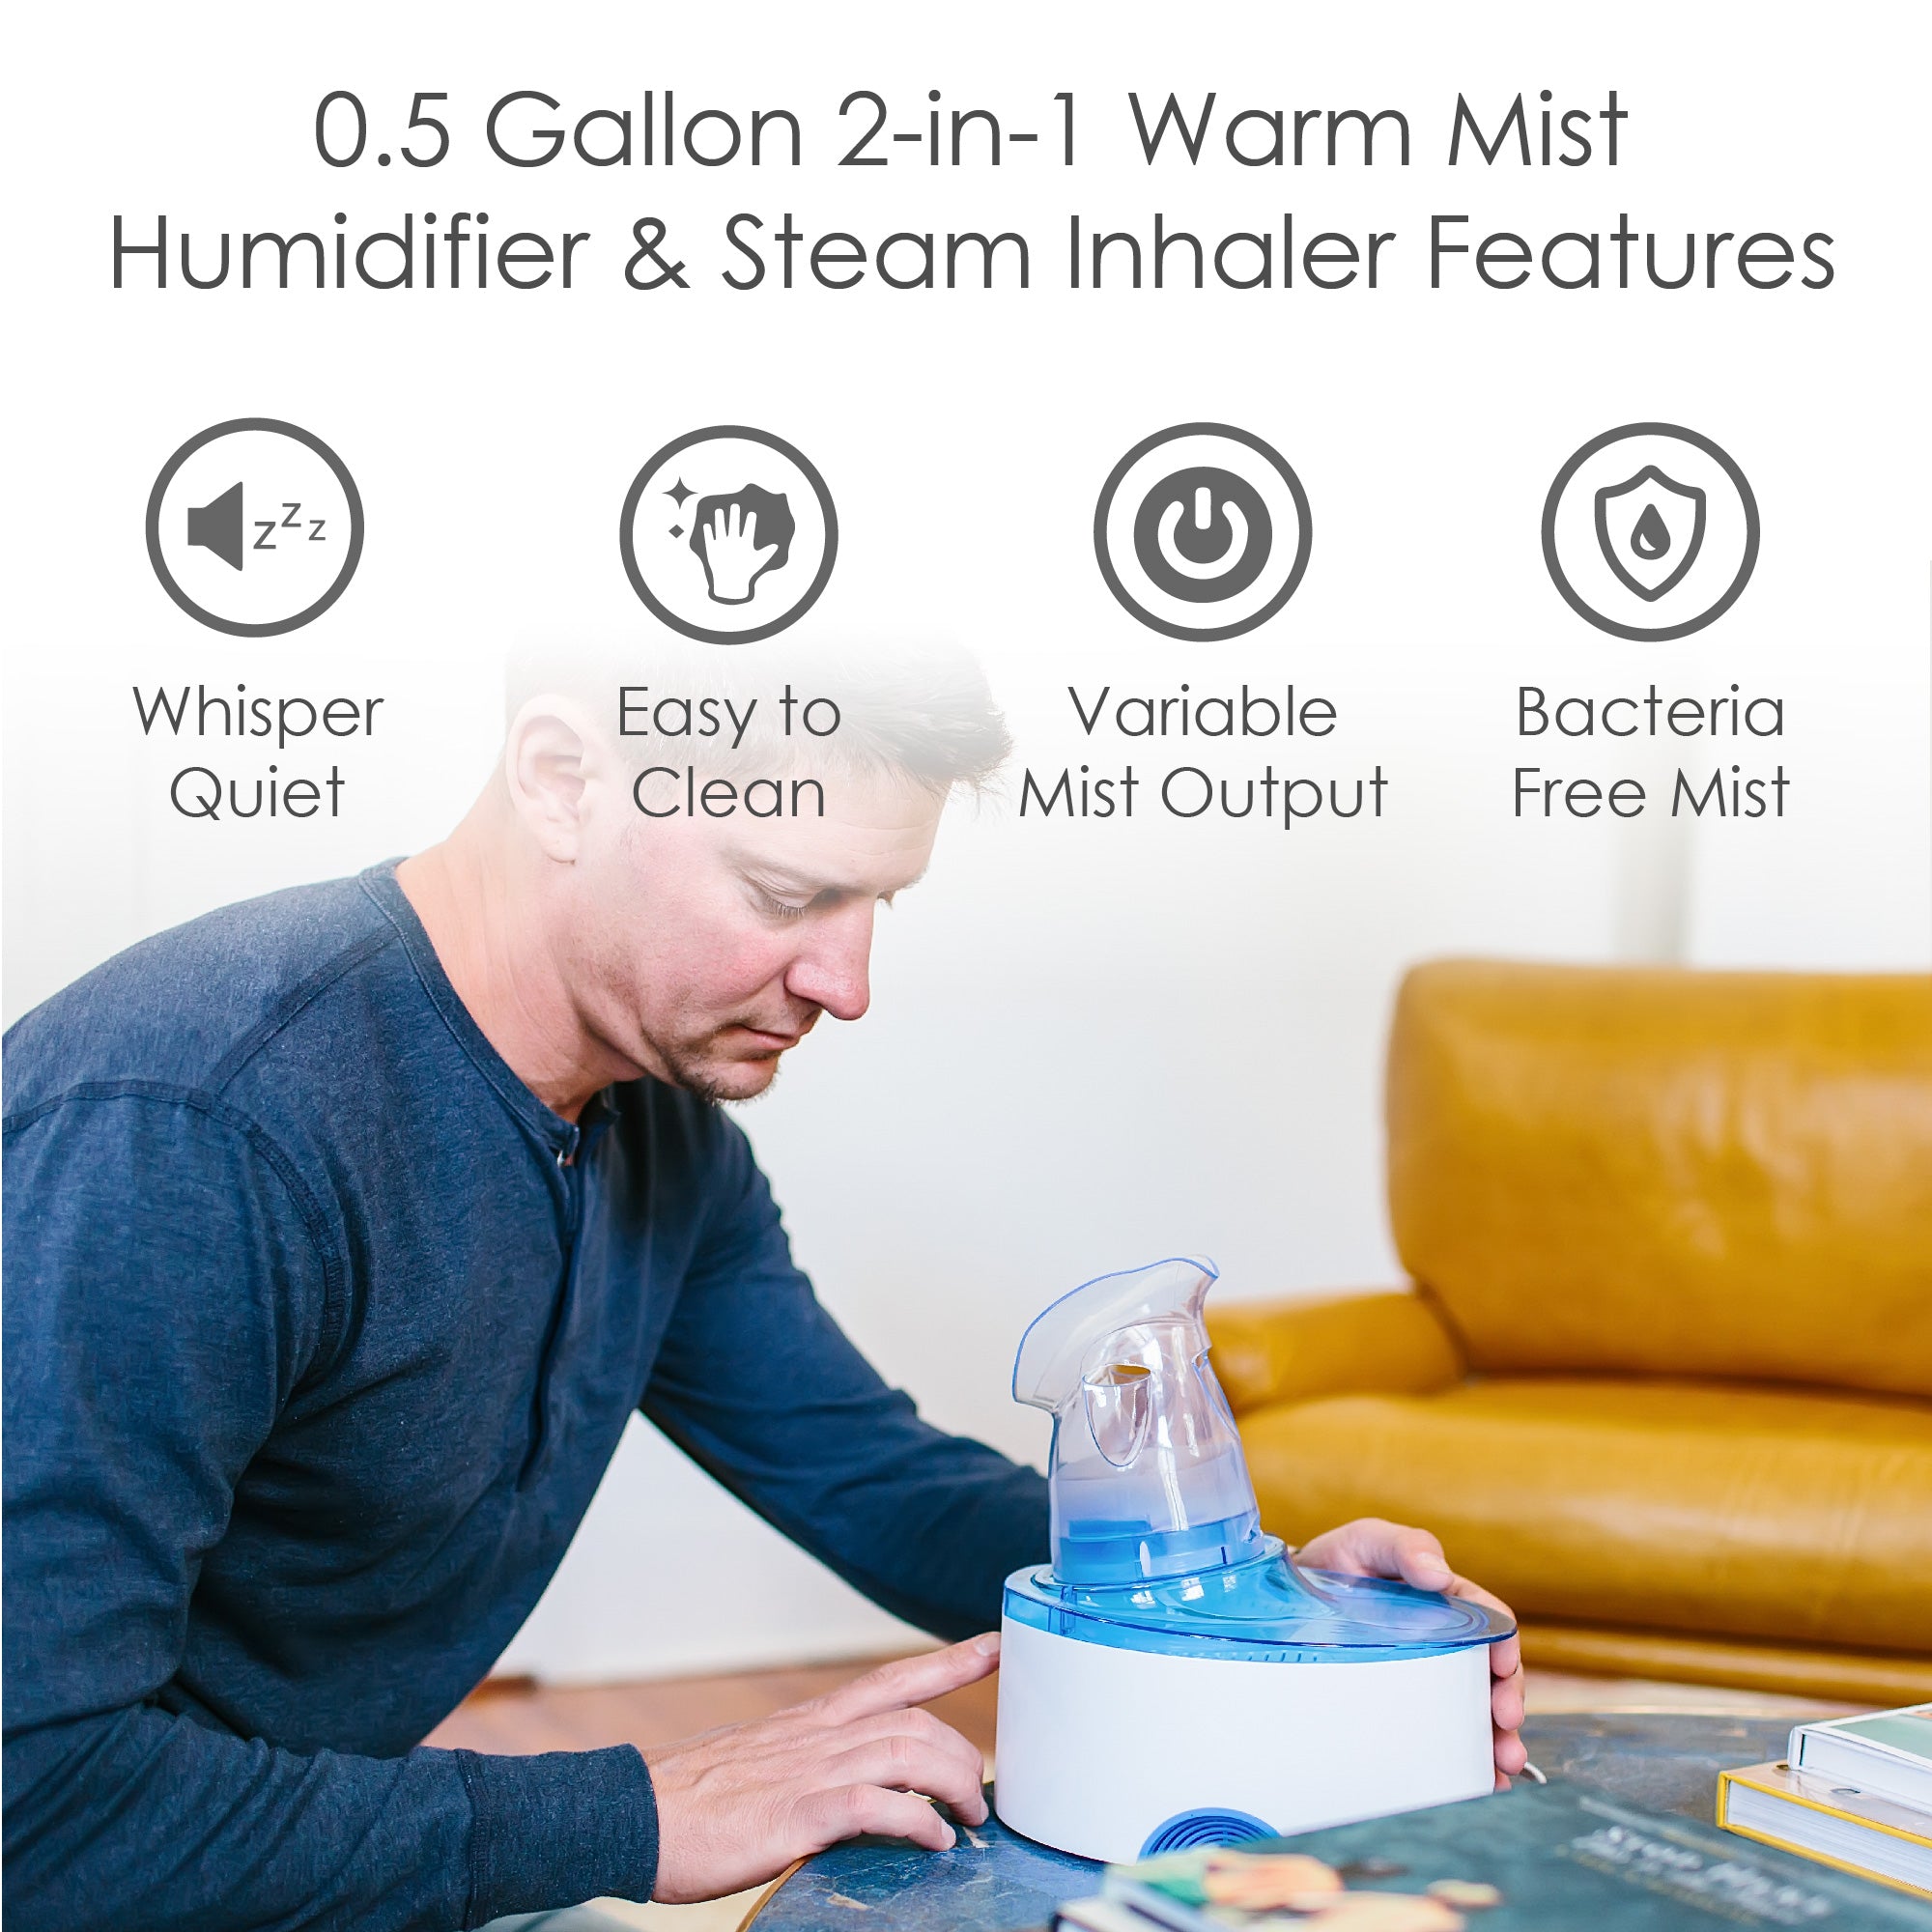 Warm Mist Humidifier